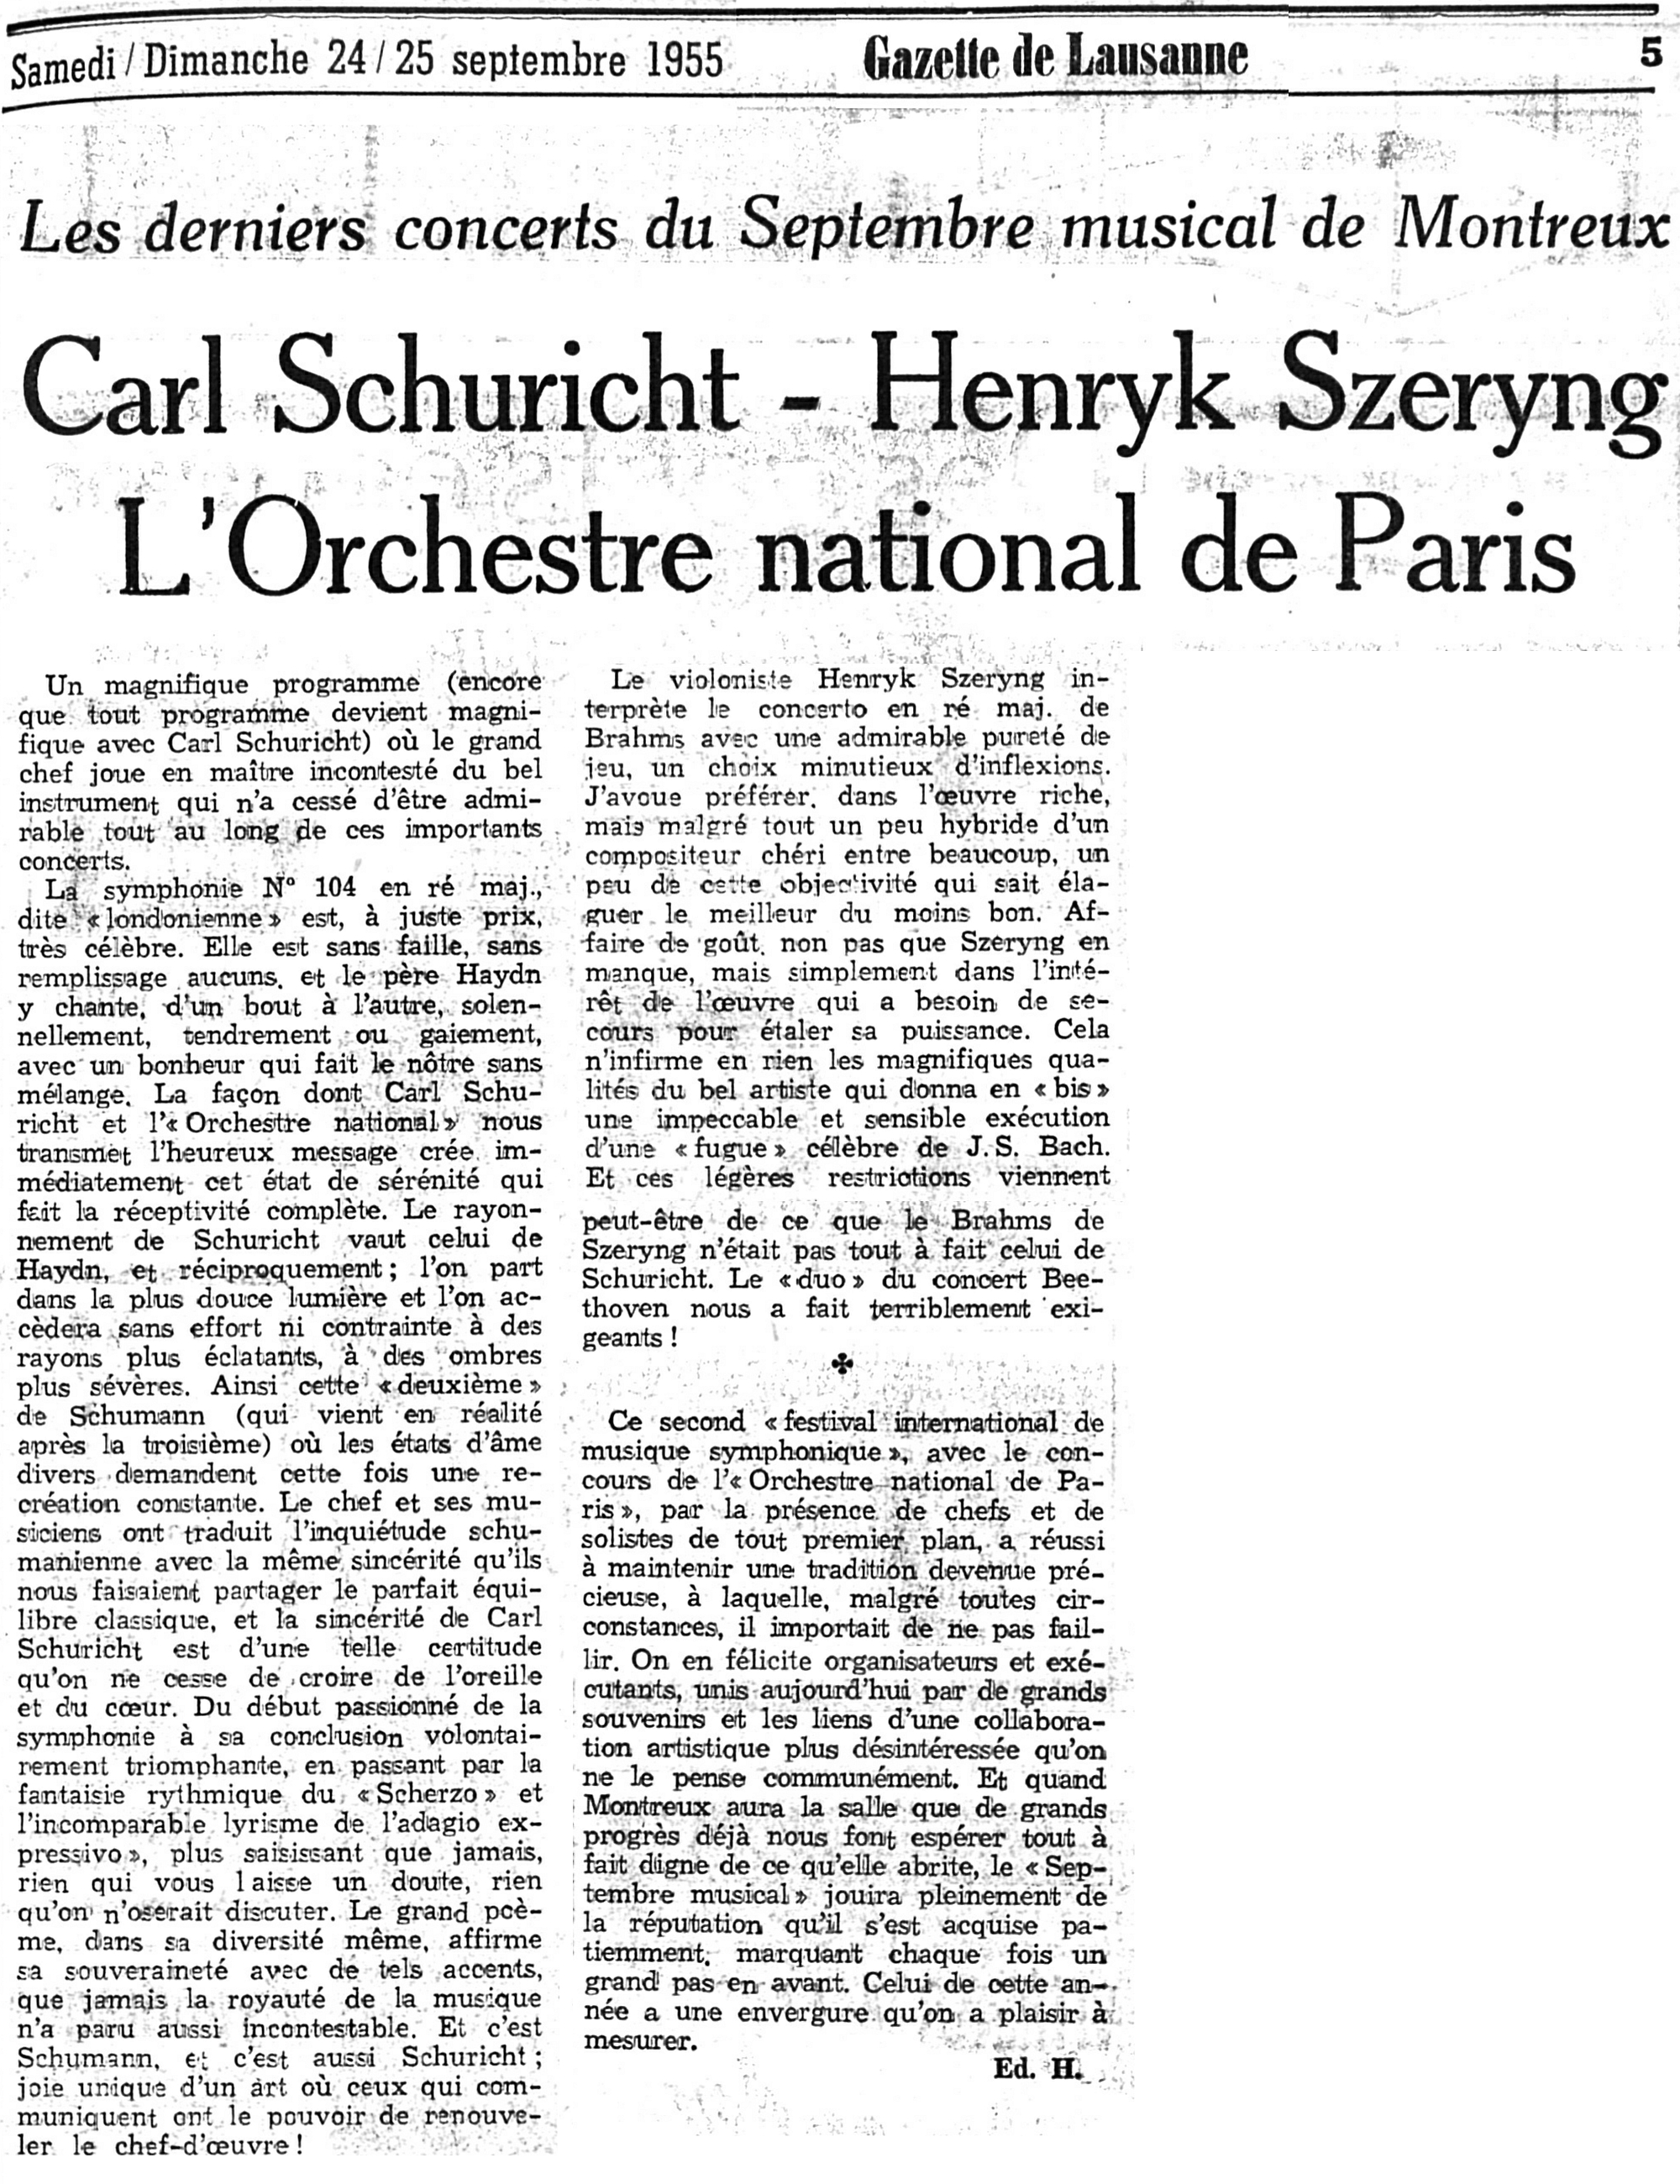 Schuricht Szeryng ONRTF Montreux 21 09 1955 GDL 1955 09 24 page 5